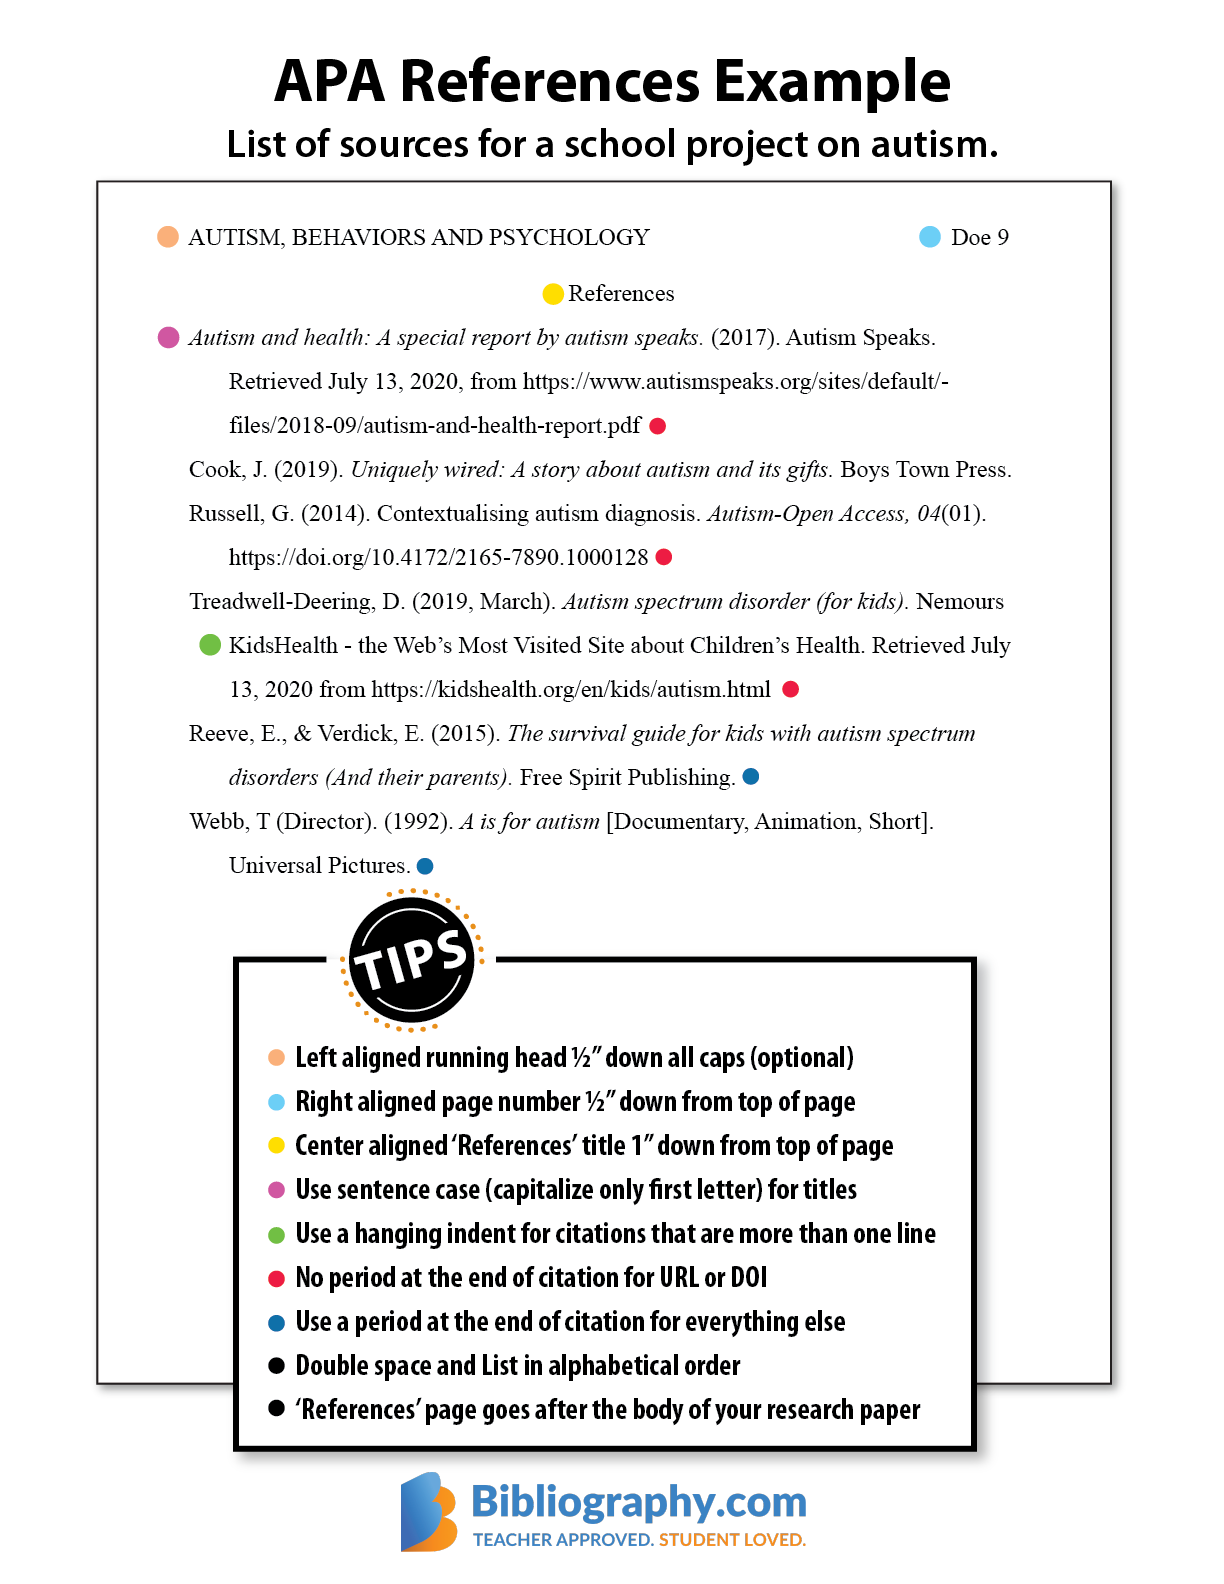 APA reference page tips